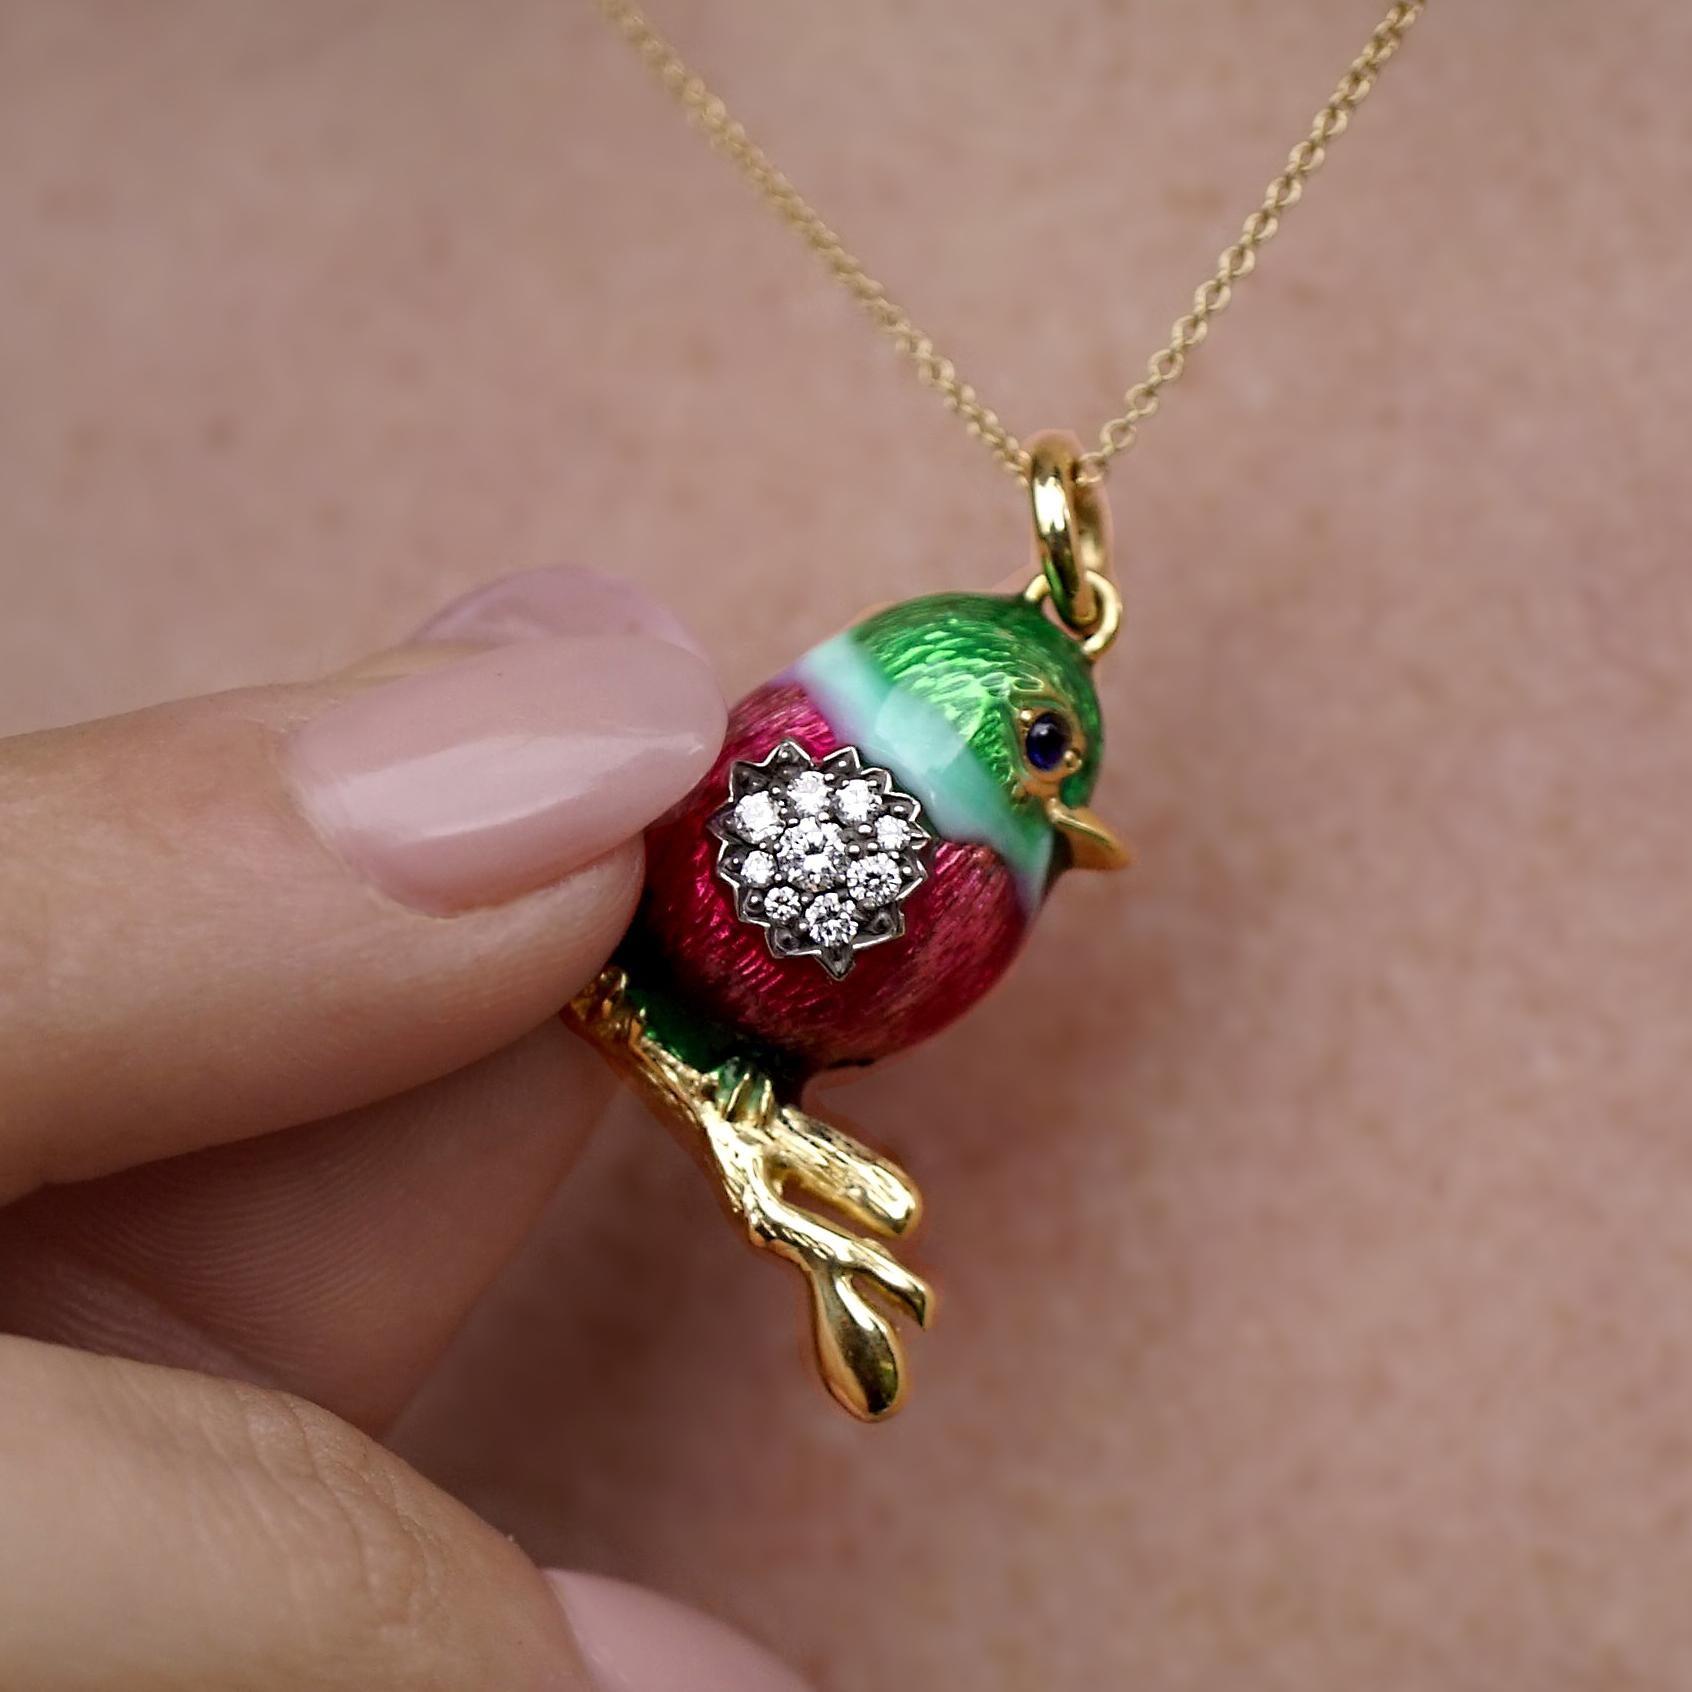 18 Karat Gold, Diamond and Enamel Rainbow Baby Bird Pendant Necklace 'Tweety' For Sale 3